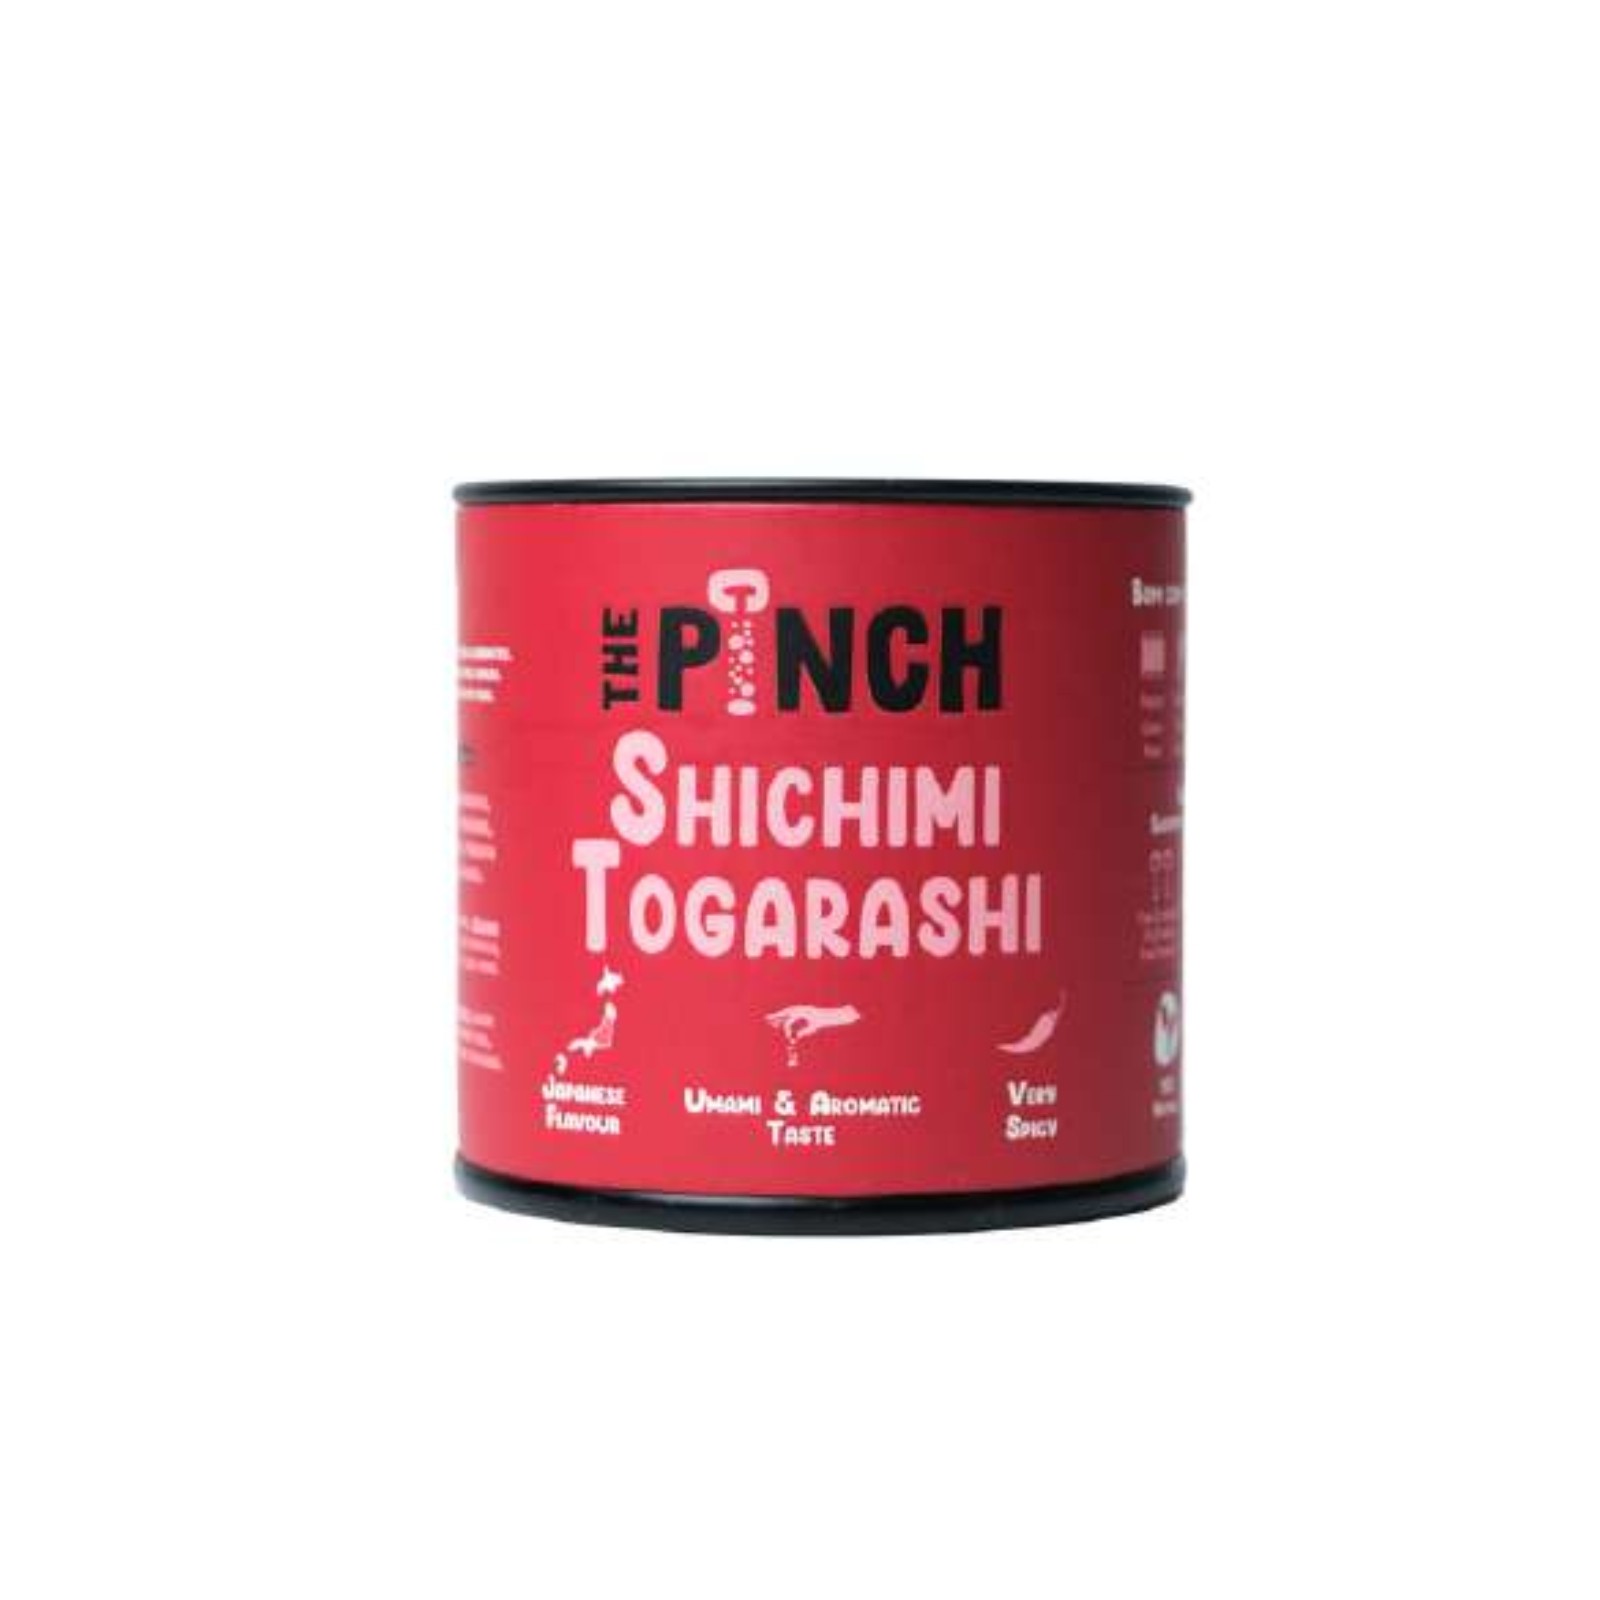 The Pinch Gewürz Shichimi Togarashi